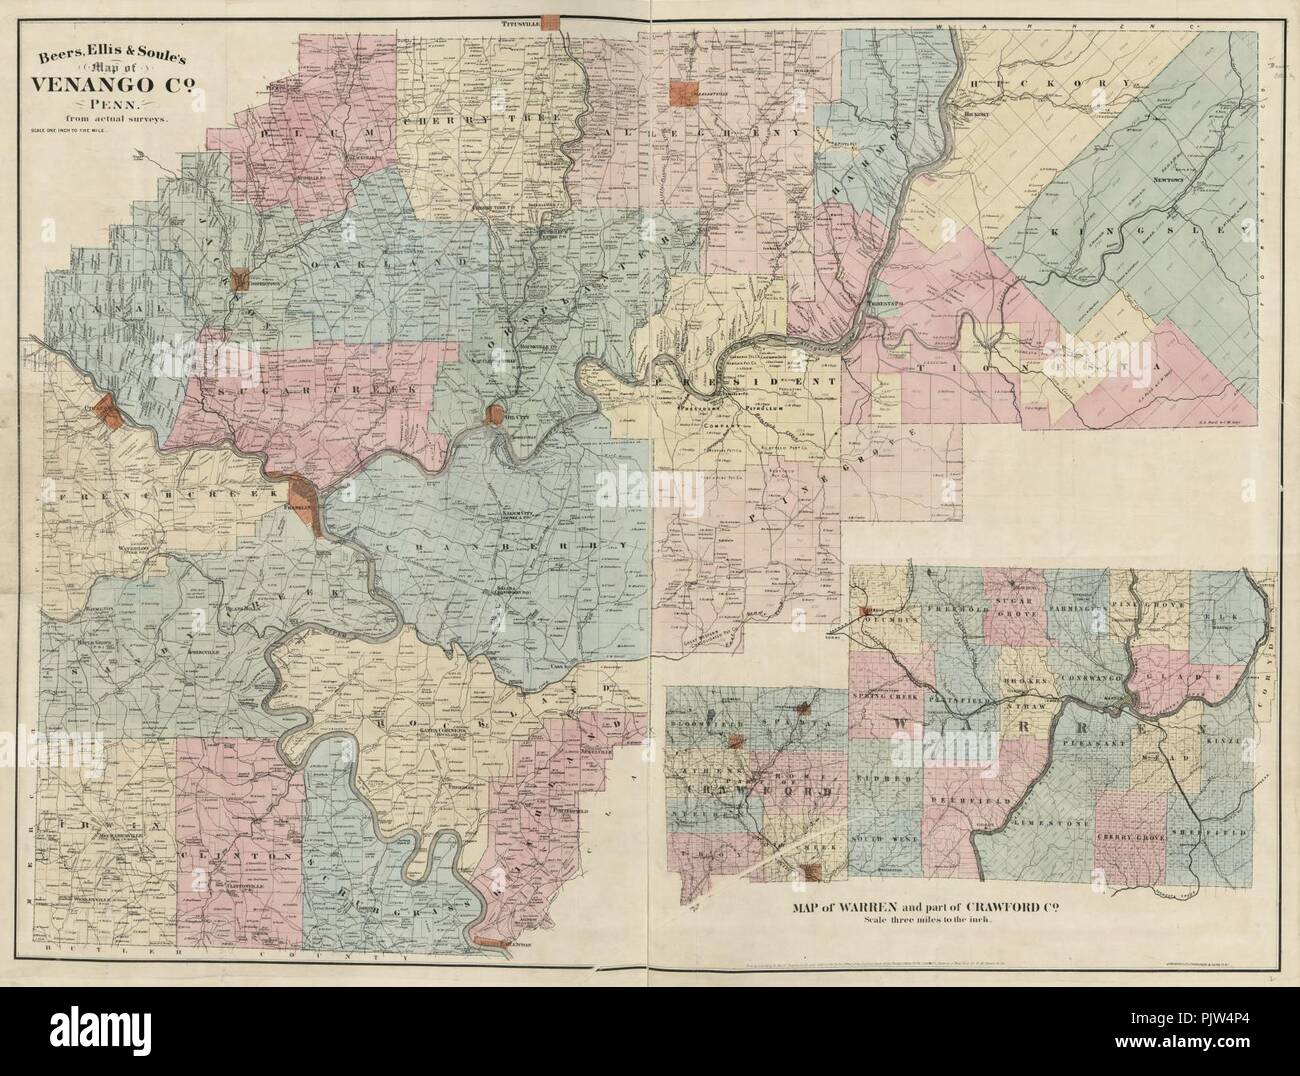 Beers, Ellis & Soule's map of Venango Co., Penn. - from actual surveys. Stock Photo